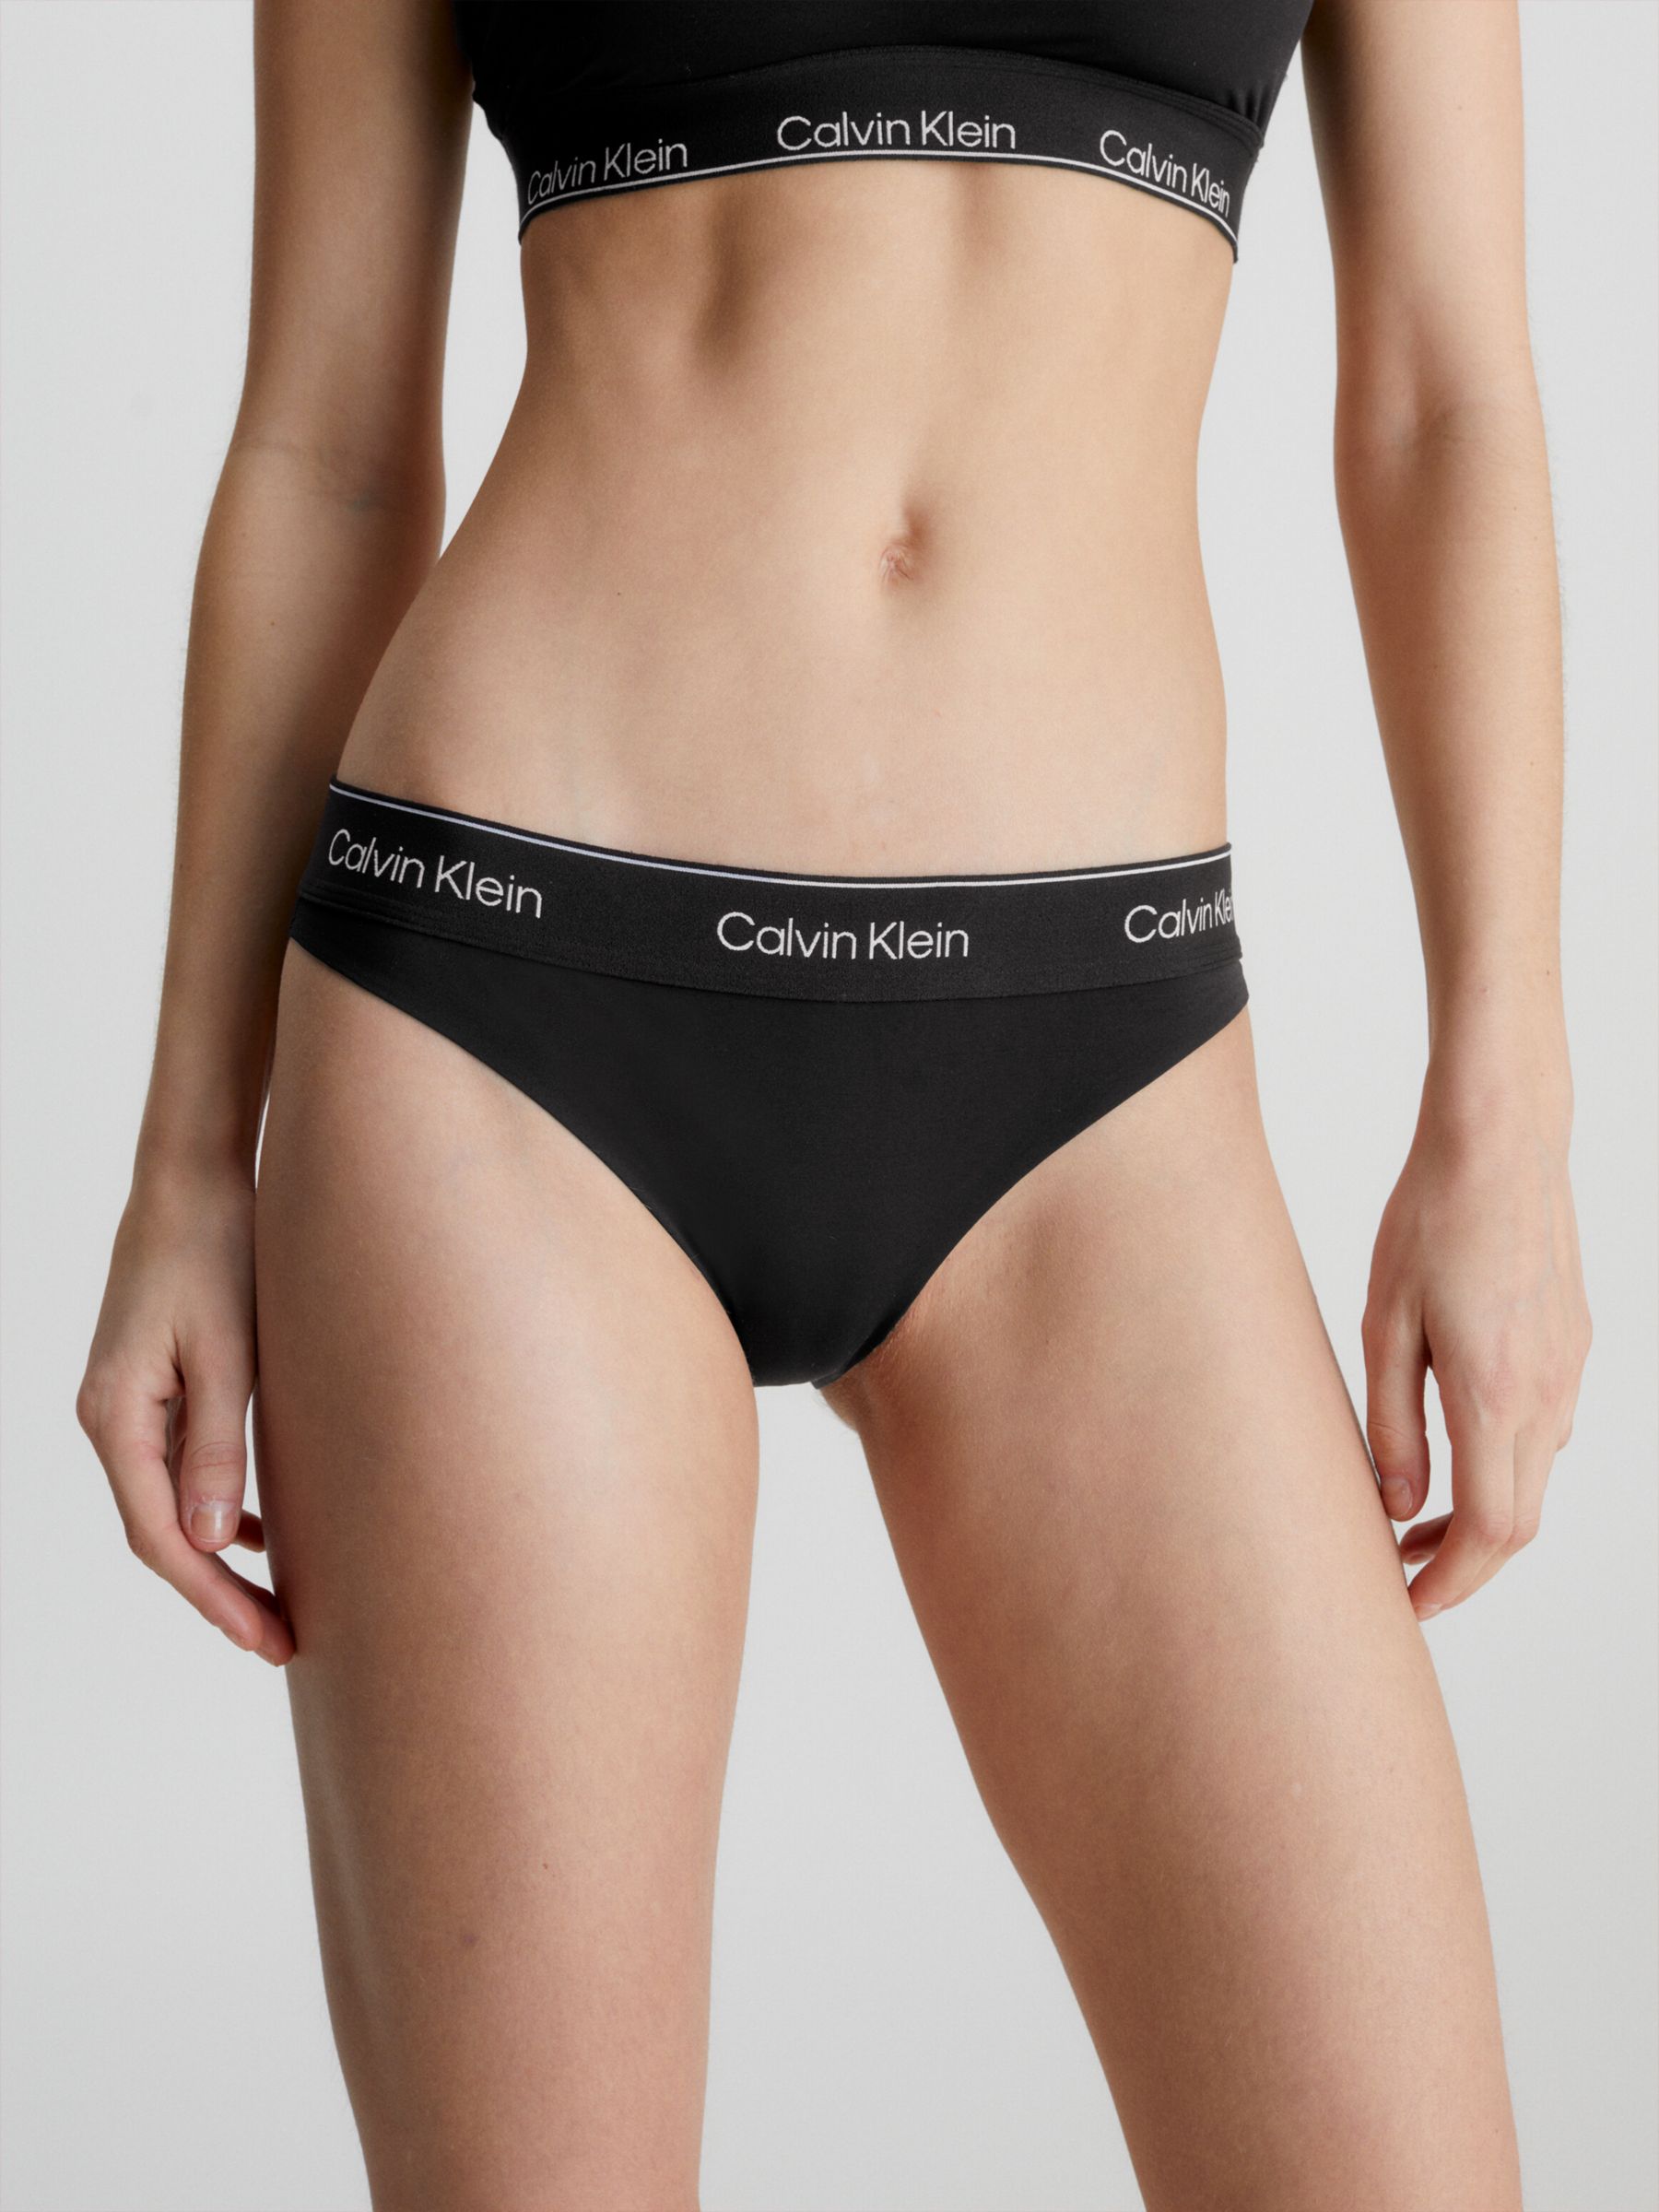 Calvin Klein Modern Performance Bikini Knickers, Black, XS